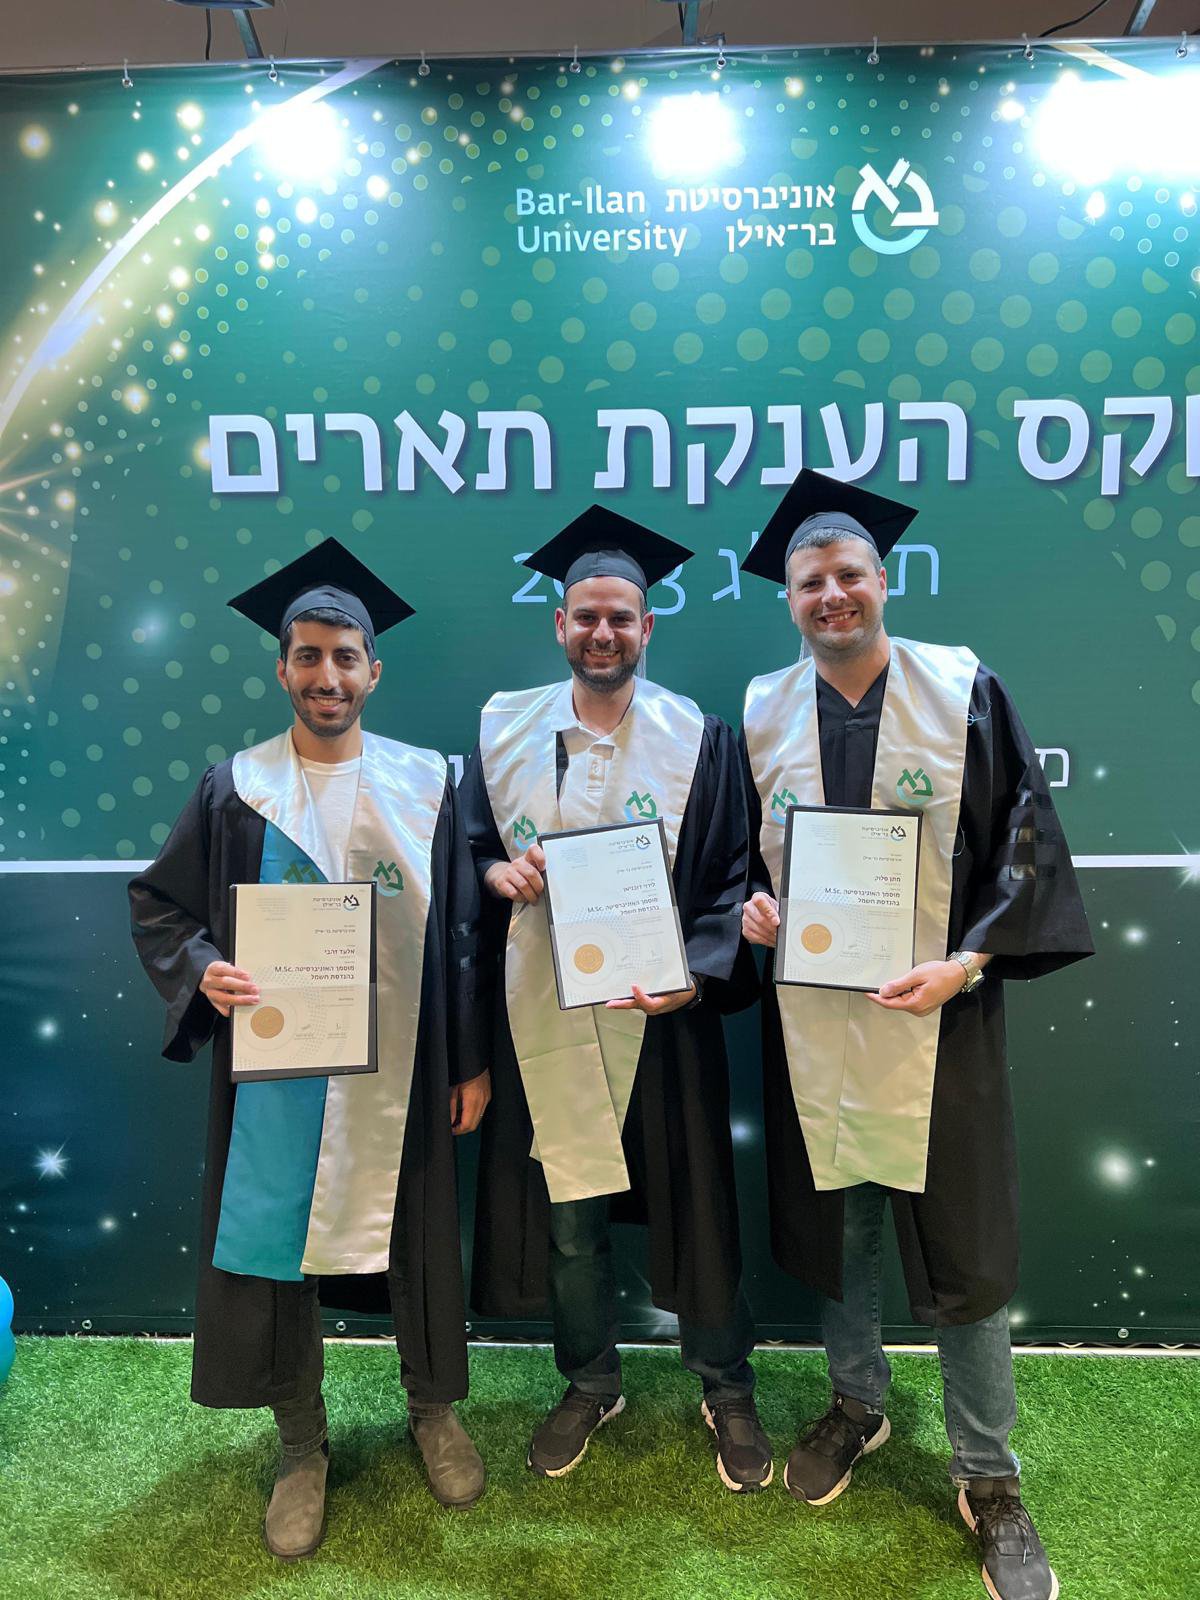 Congratulations to Matan, Leroy, and Elad, for receiving the M.Sc. diplomas!